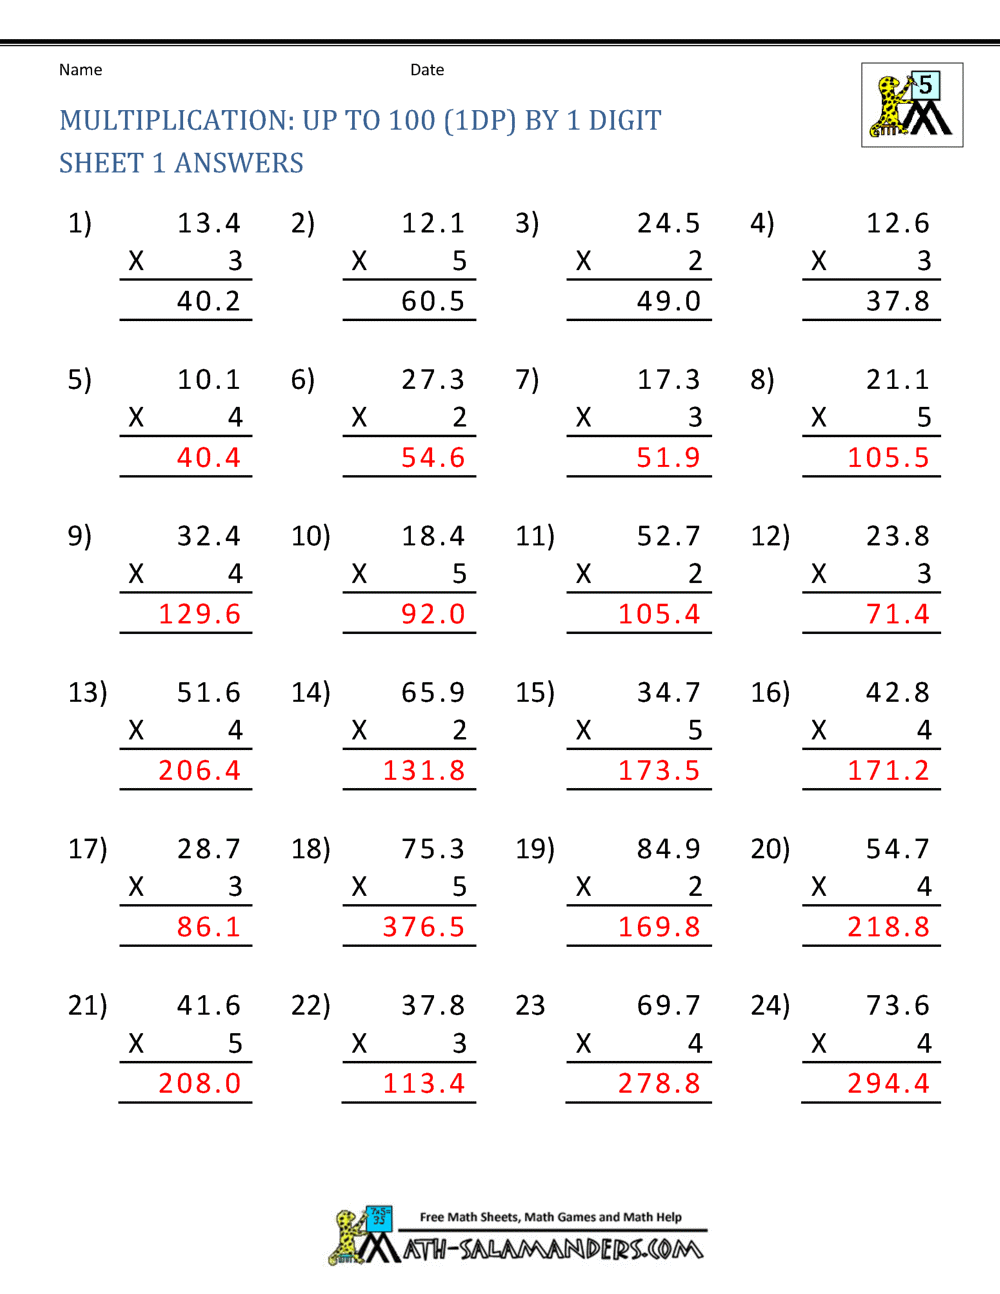 free-printable-long-division-worksheets-5th-grade-printabletemplates